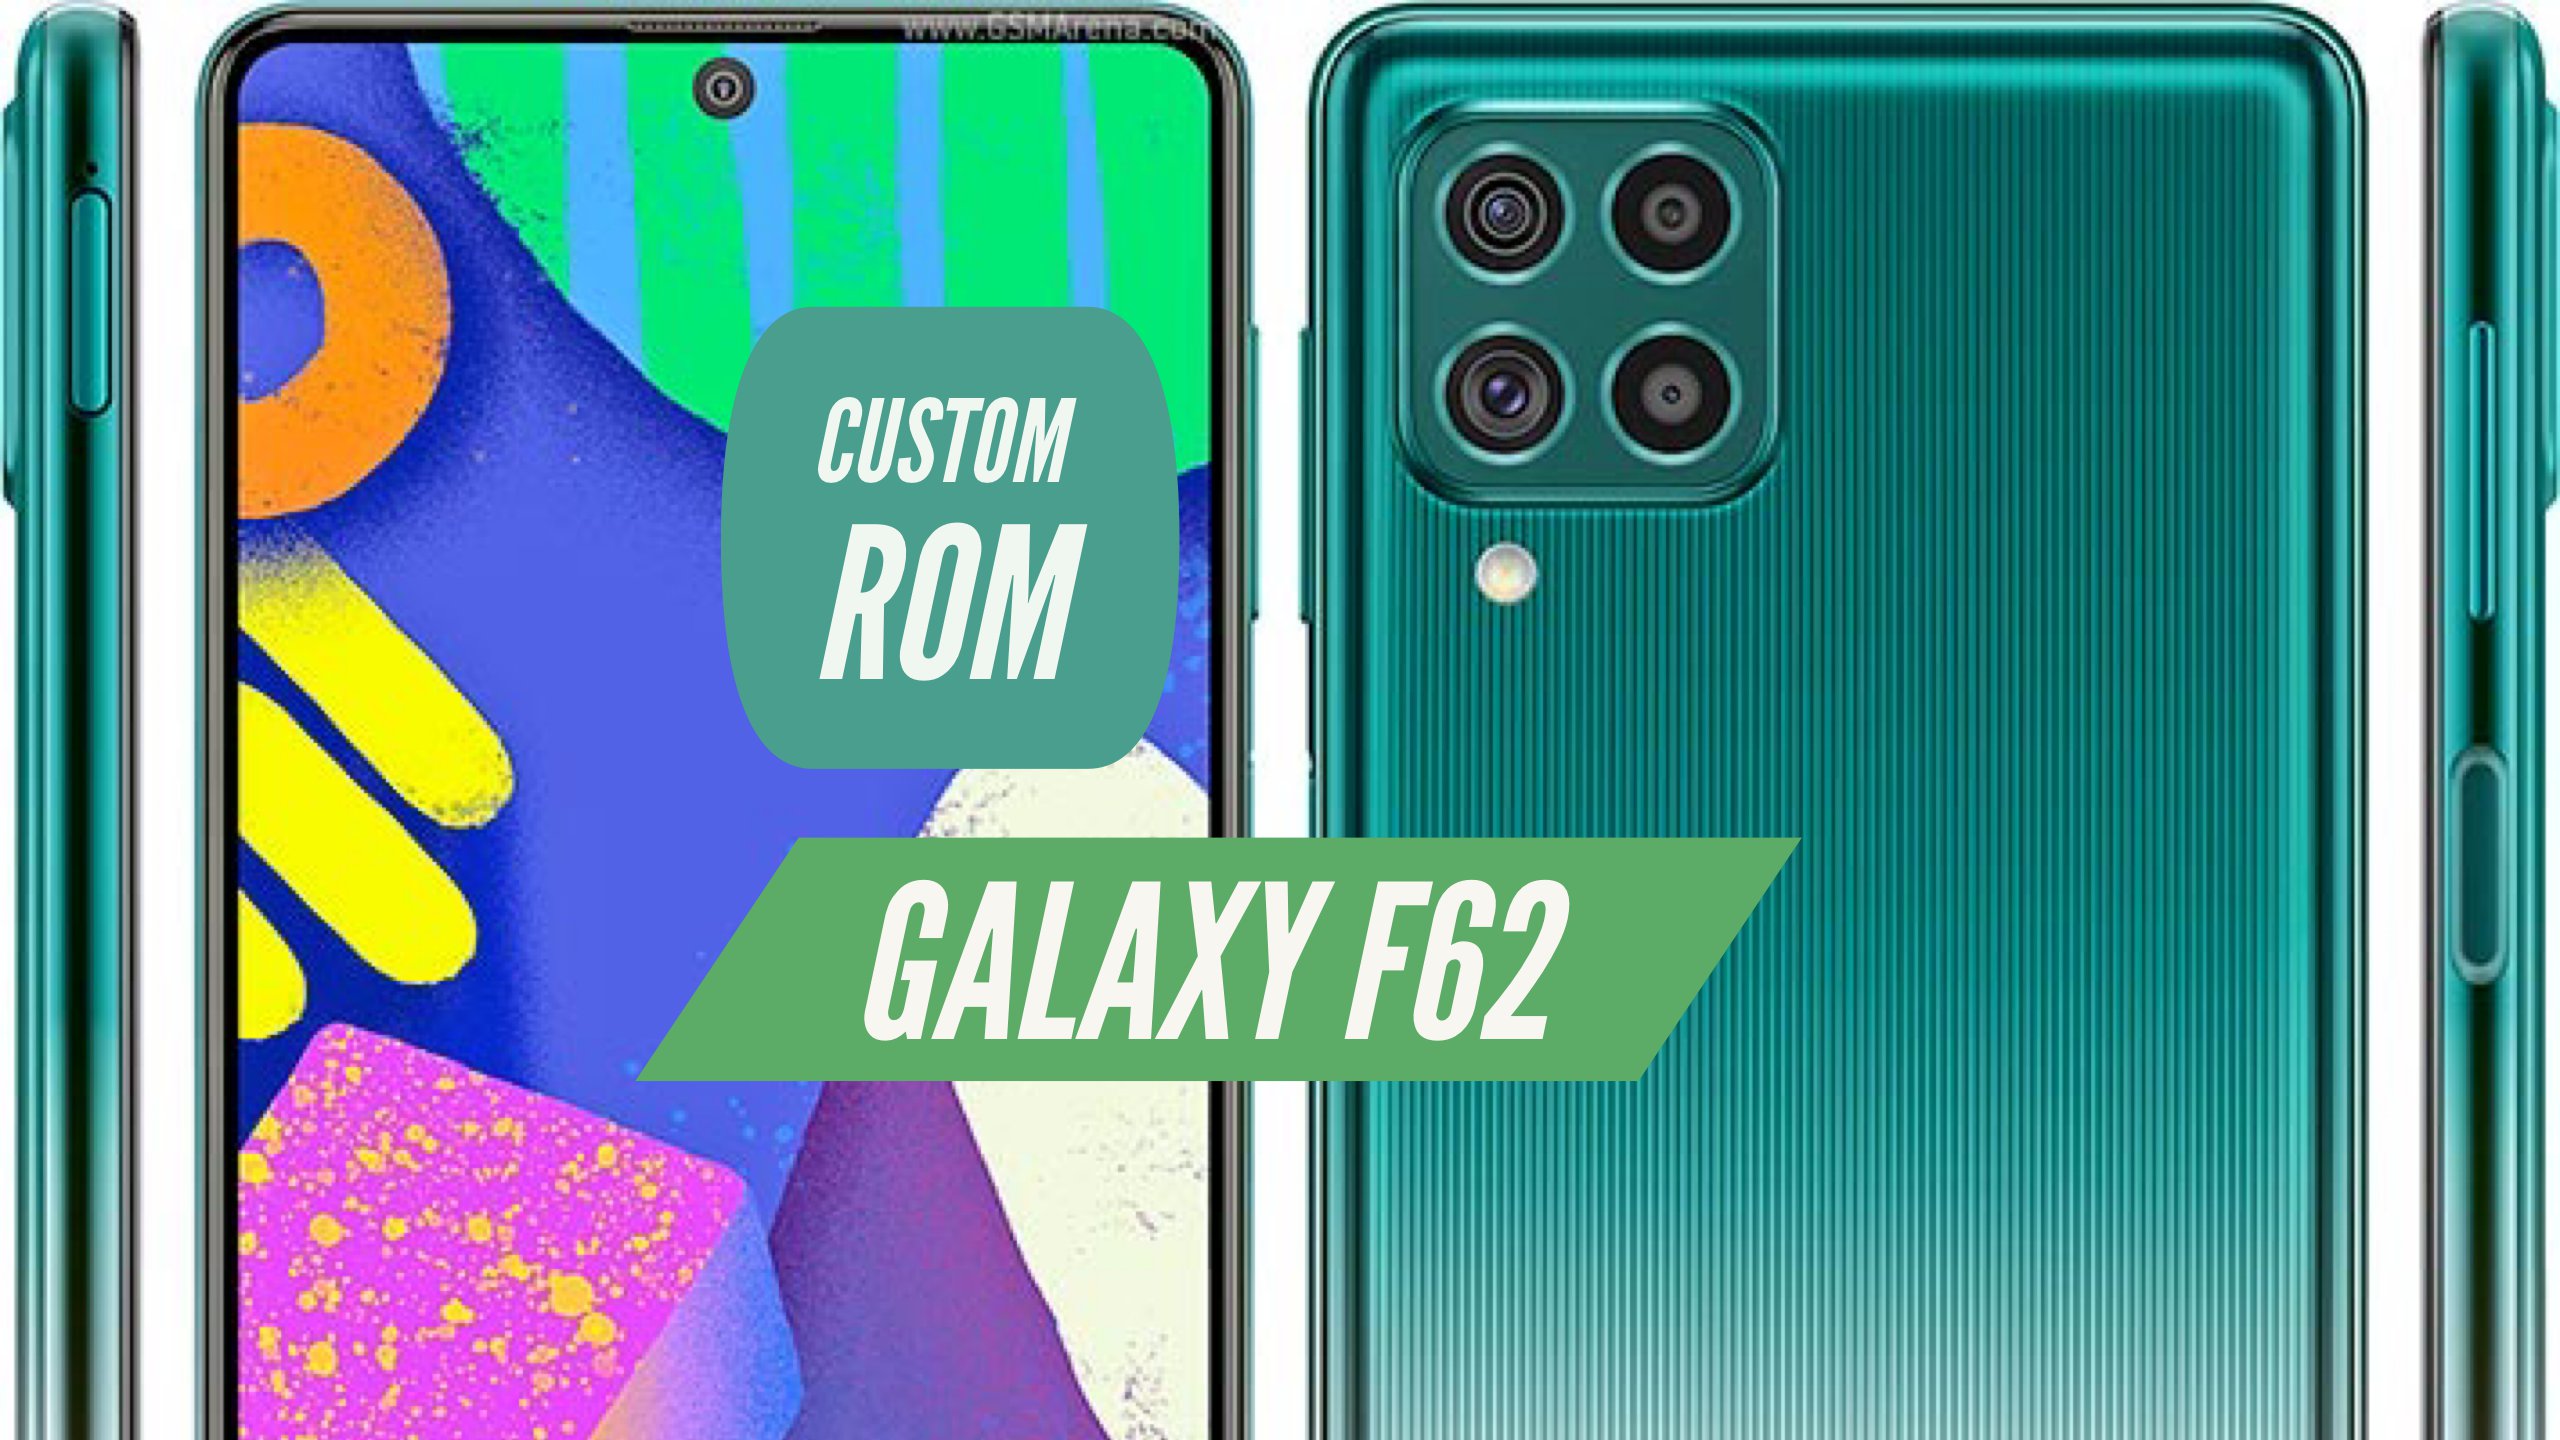 Galaxy F62 Custom ROM